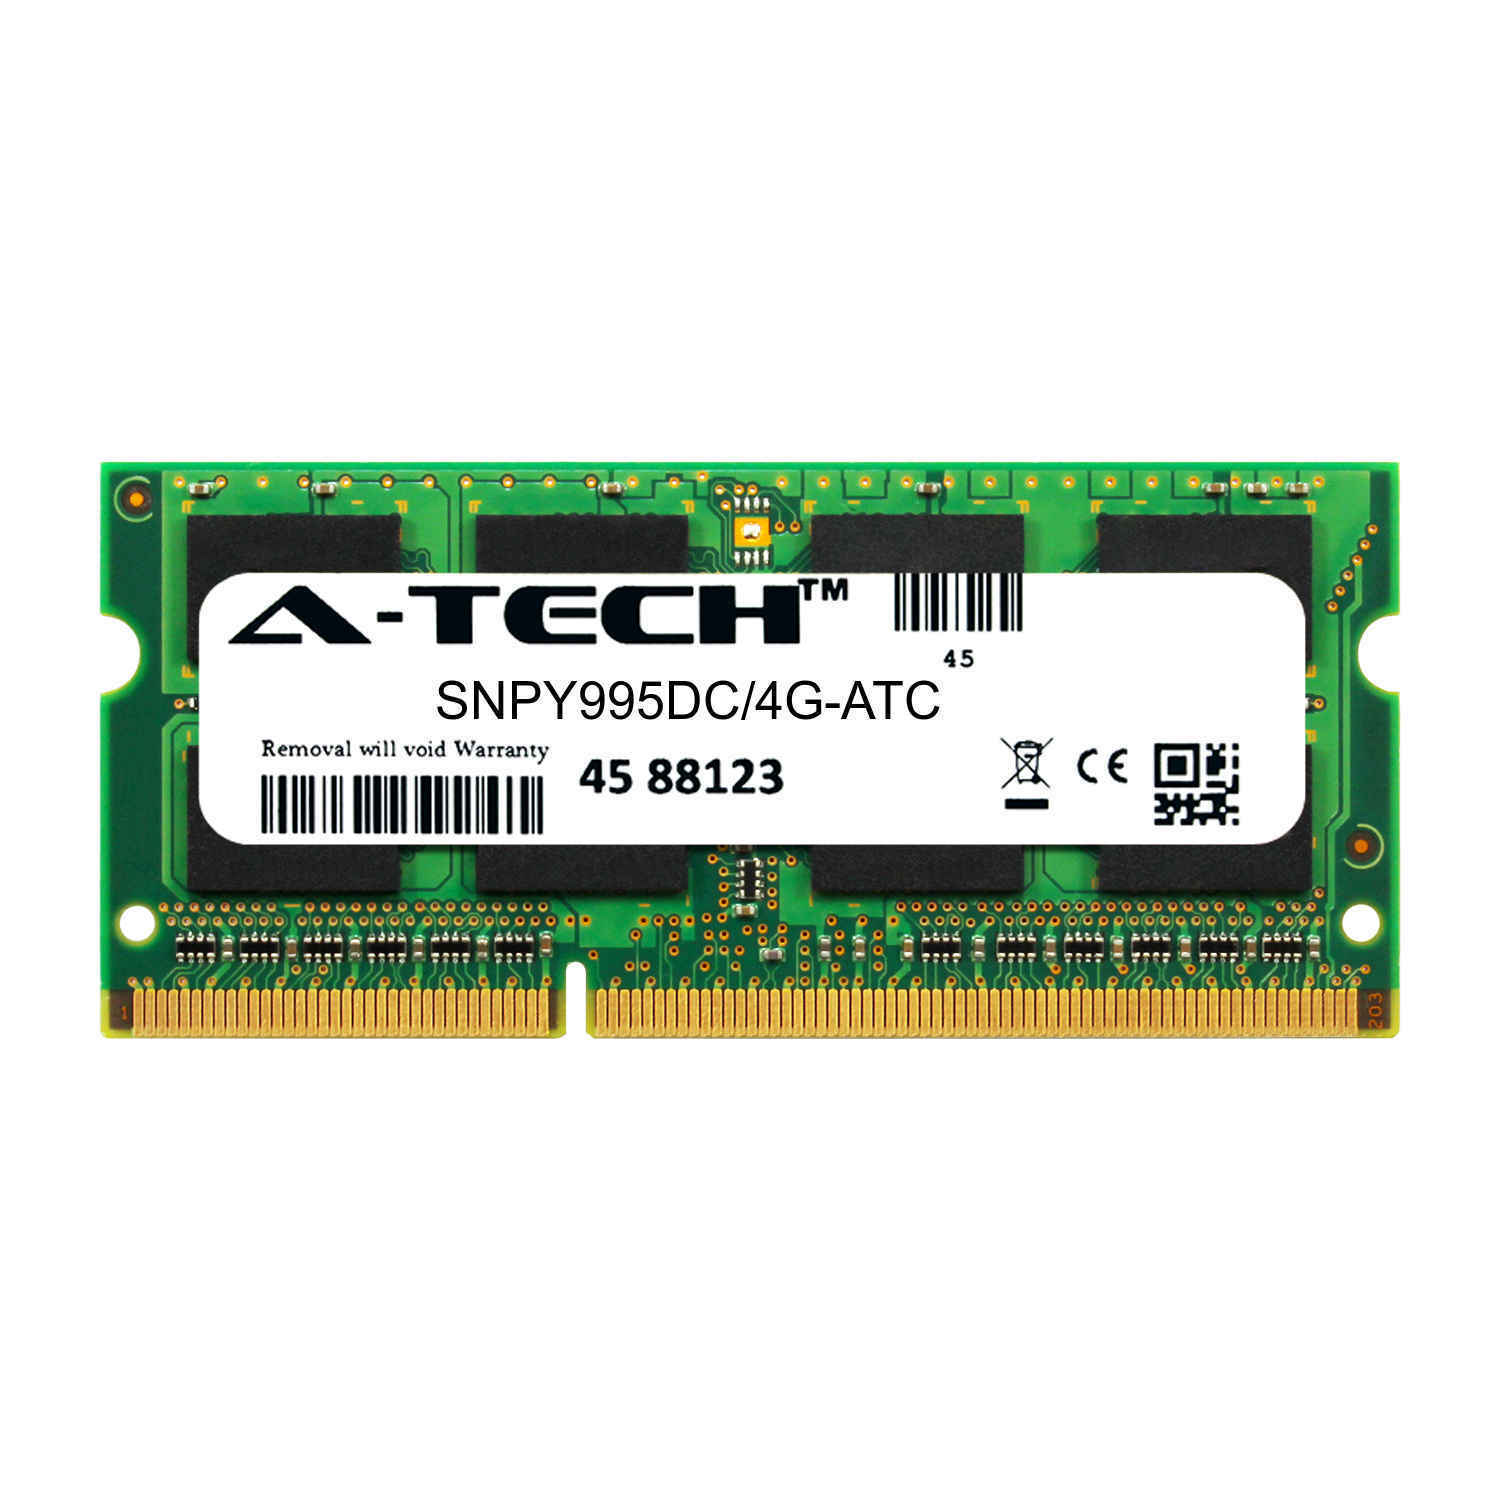 4GB DDR3 PC3-8500 1066MHz SODIMM (Dell SNPY995DC/4G Equivalent) Memory RAM